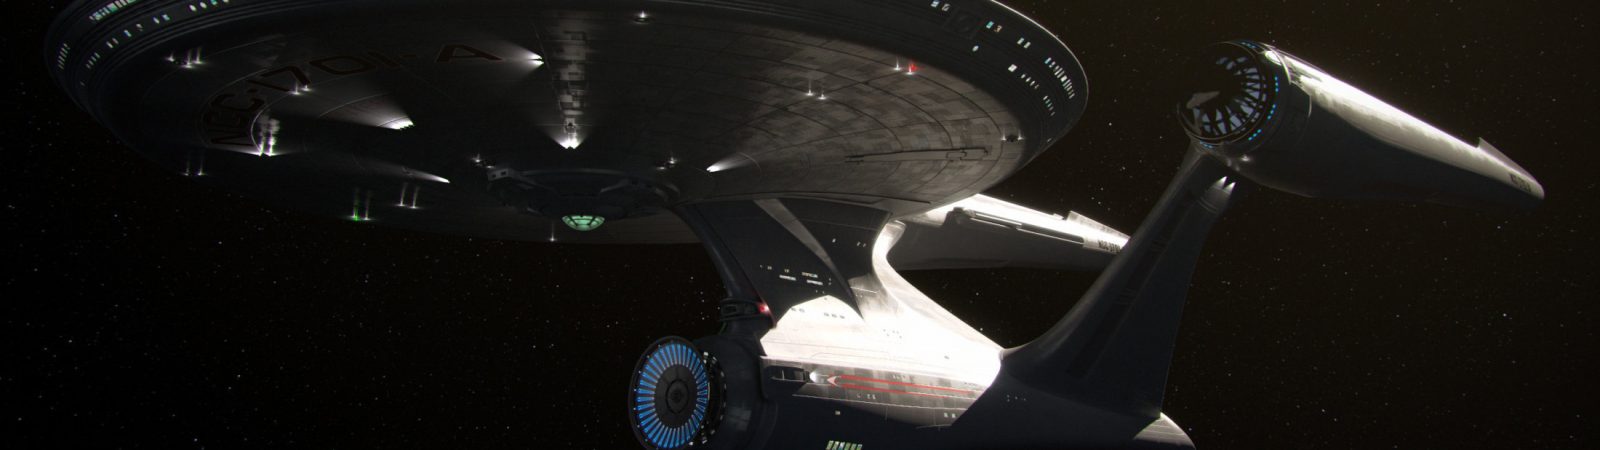 Voyager progress #5